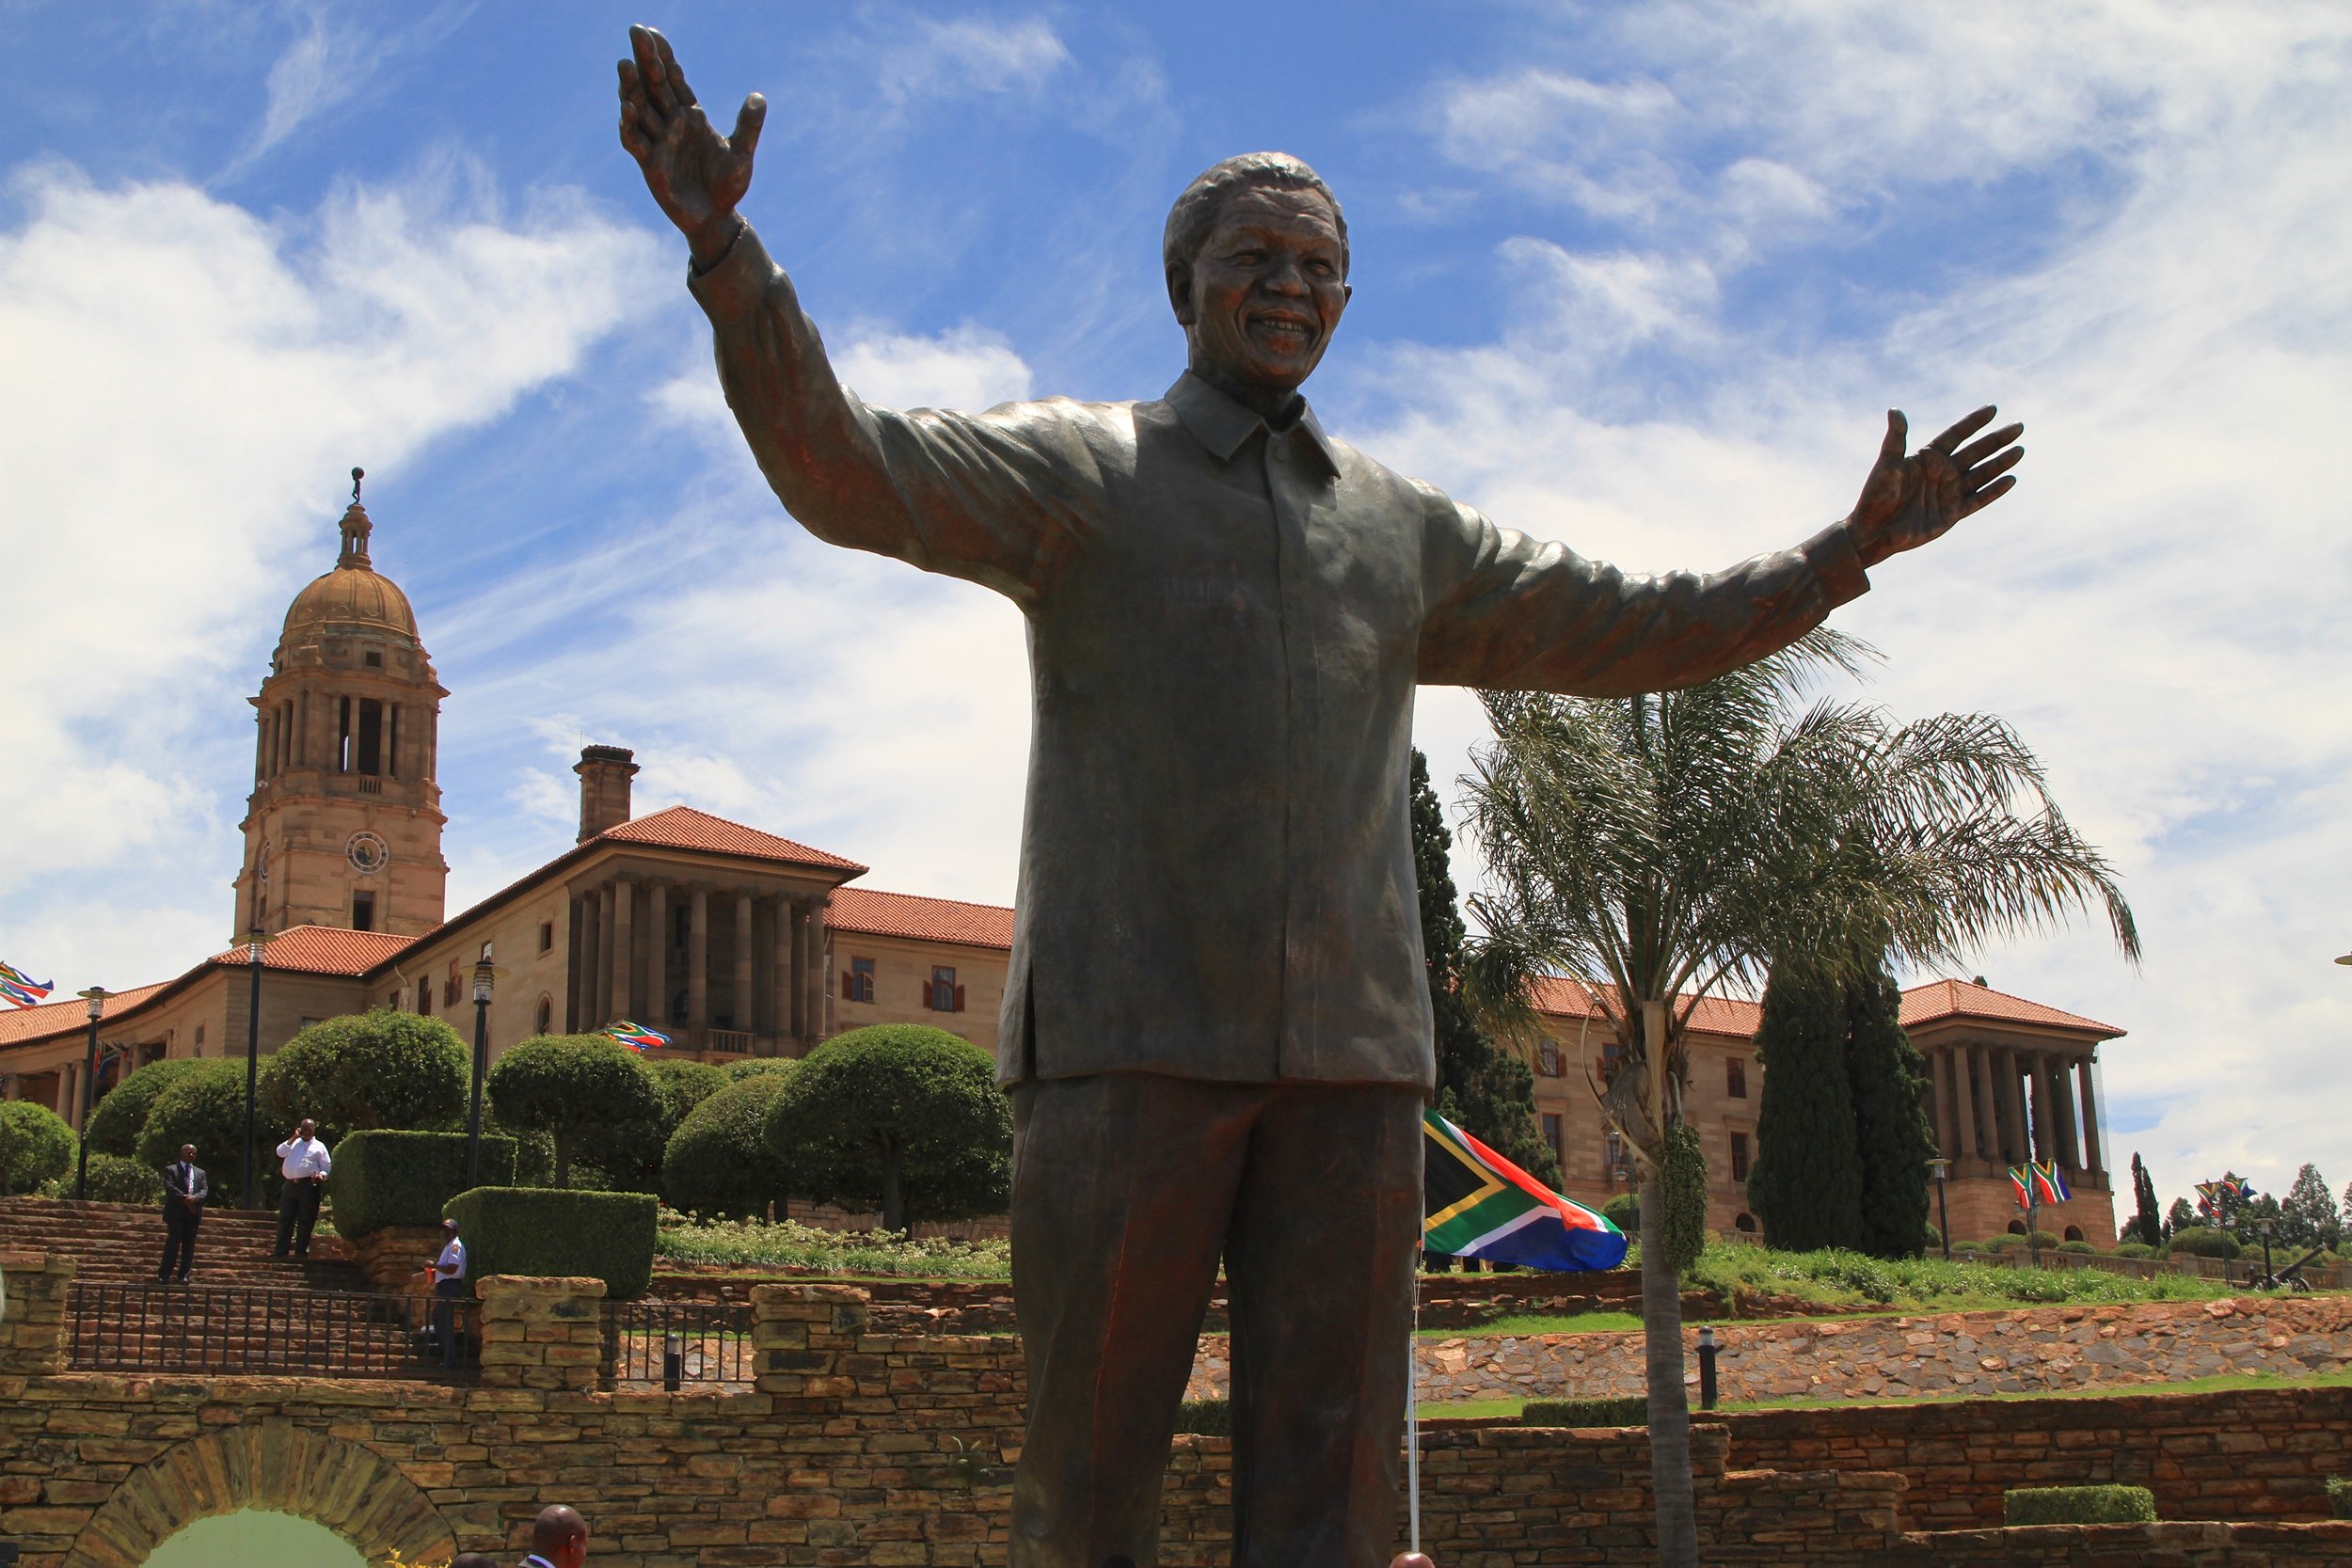 IMG_0262 - 2013-12-16 Mandela Statue.jpg